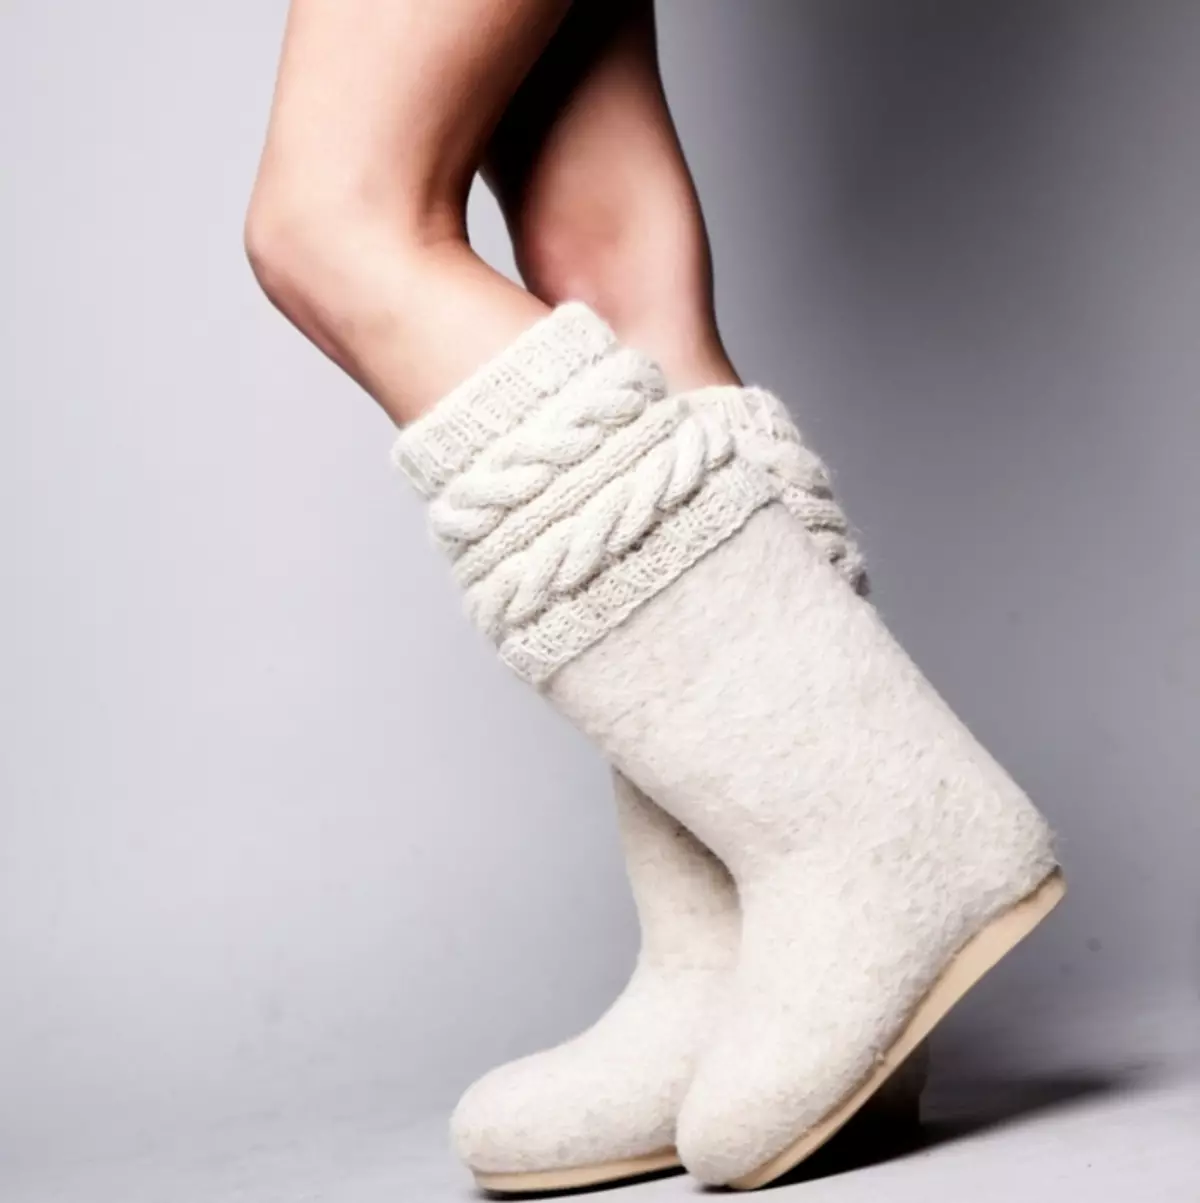 Botas de feltro branco (27 fotos): Como limpar os zapatos brancos sentidos 15067_8